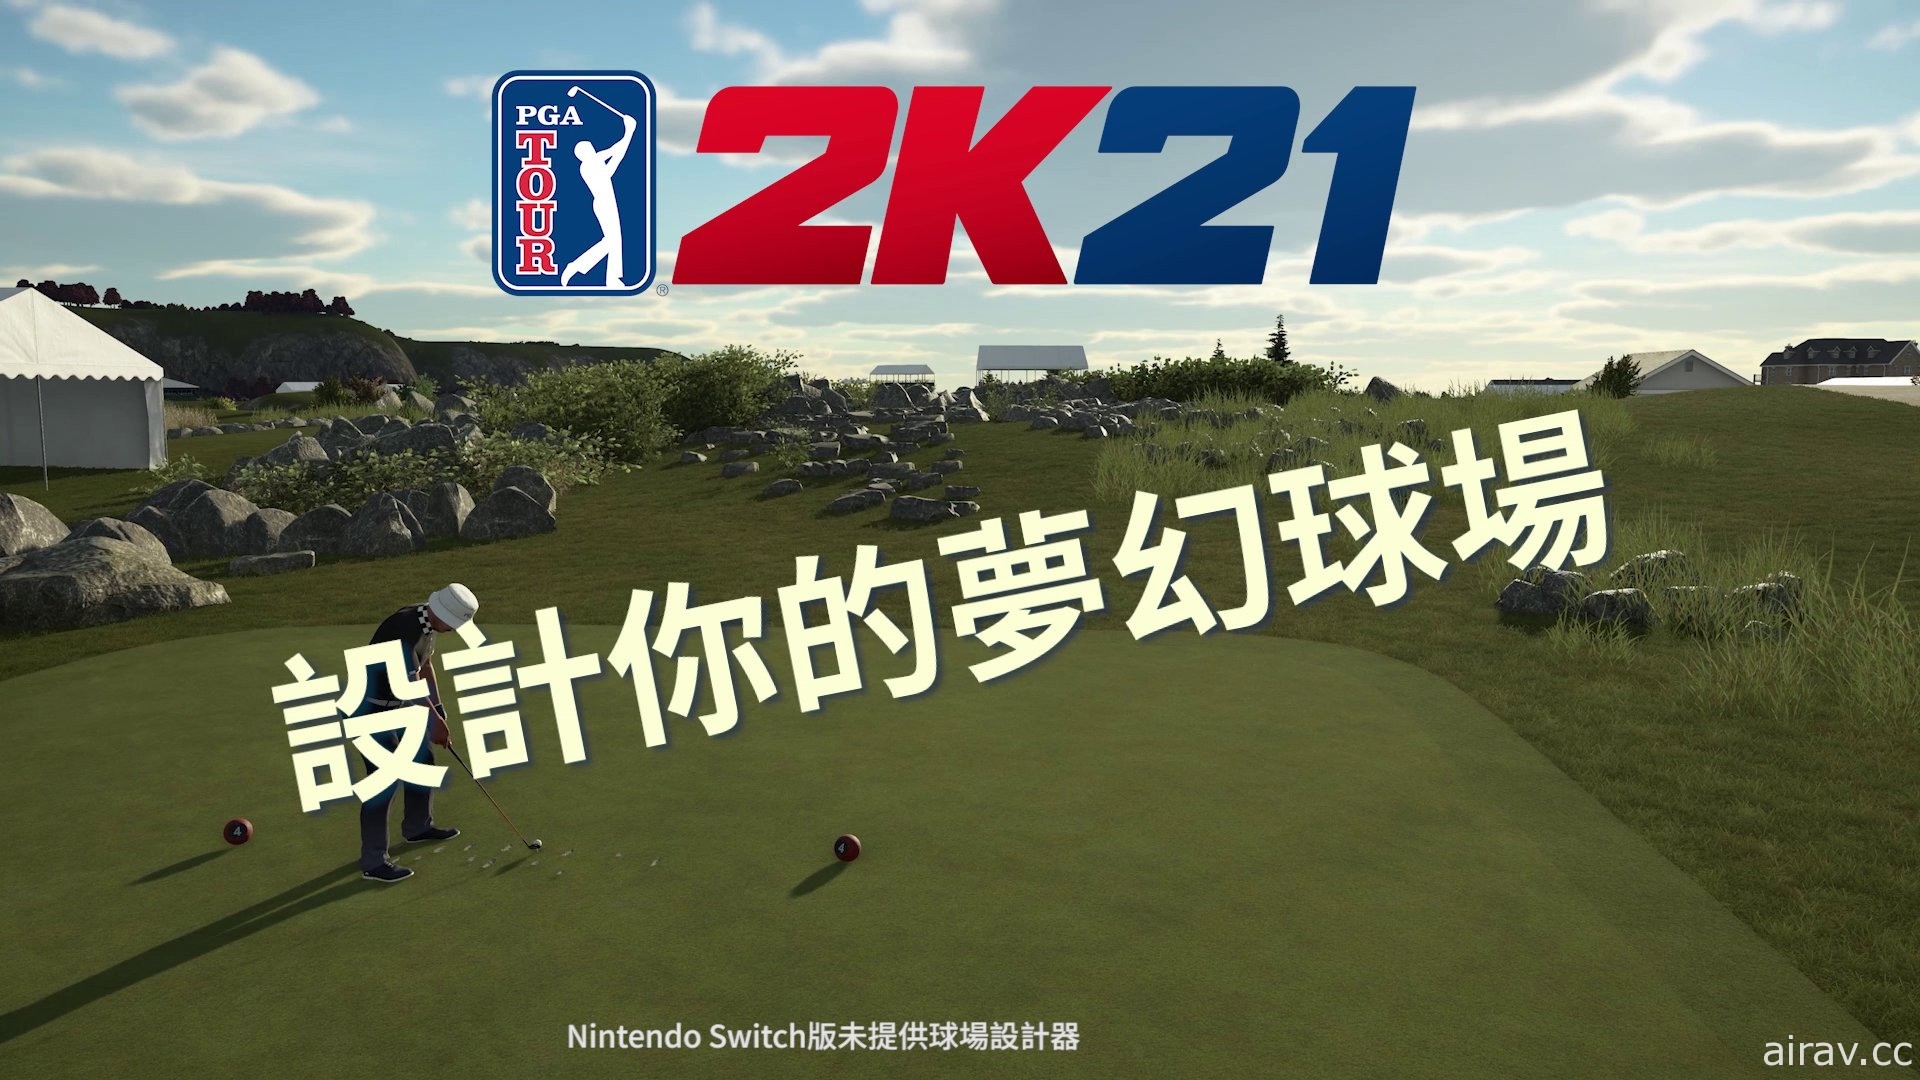 《PGA 巡回赛 2K21》球场设计器让玩家打造自己的专属球场